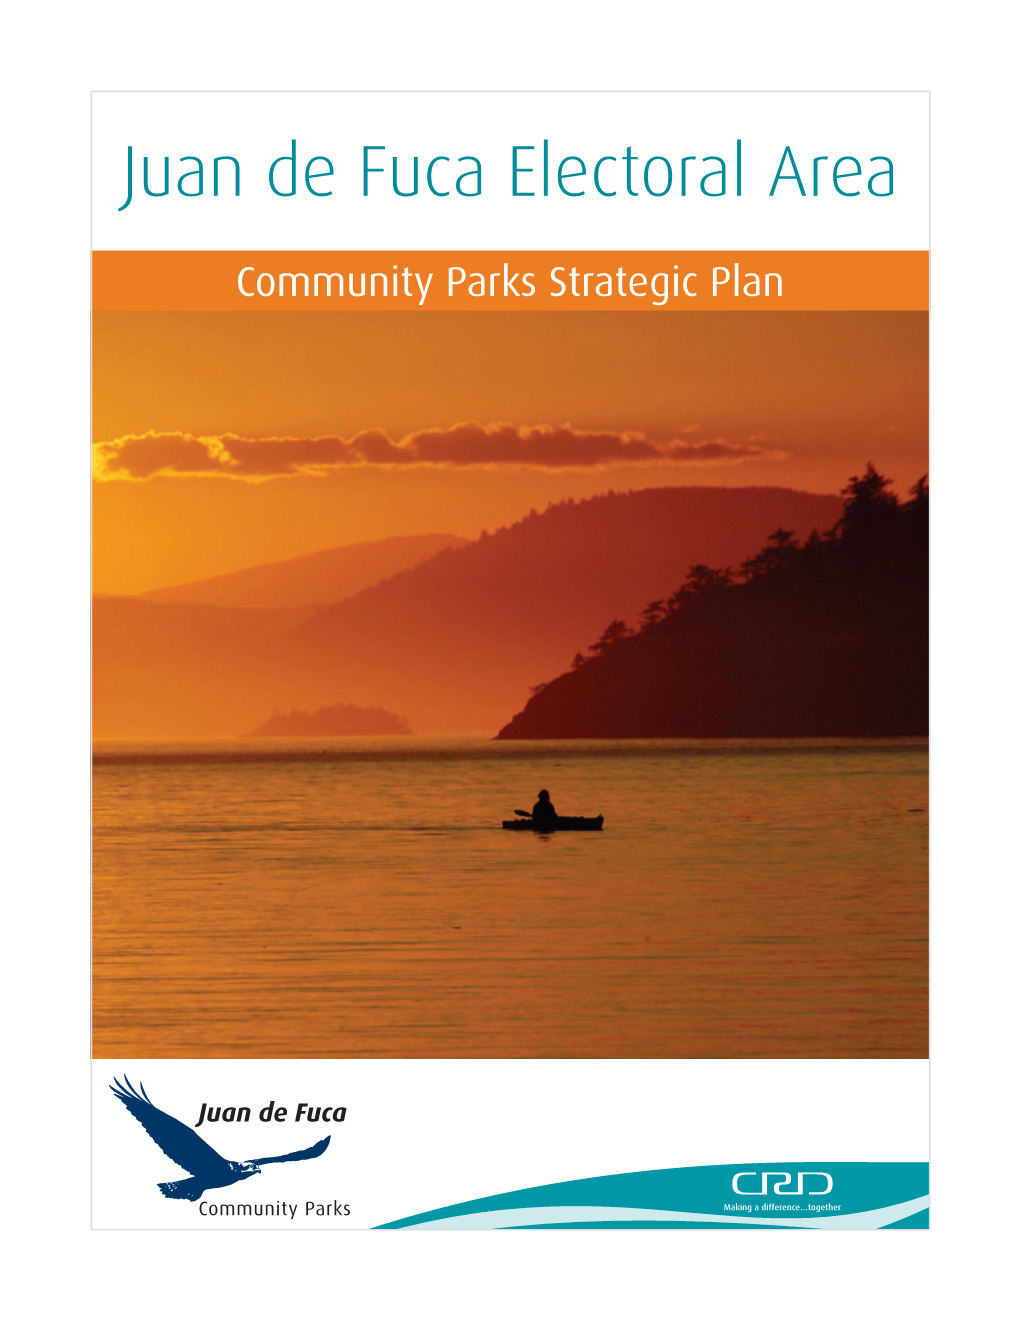 Juan De Fuca Electoral Area Community Parks Strategic Plan Represents the Culmination of That Work